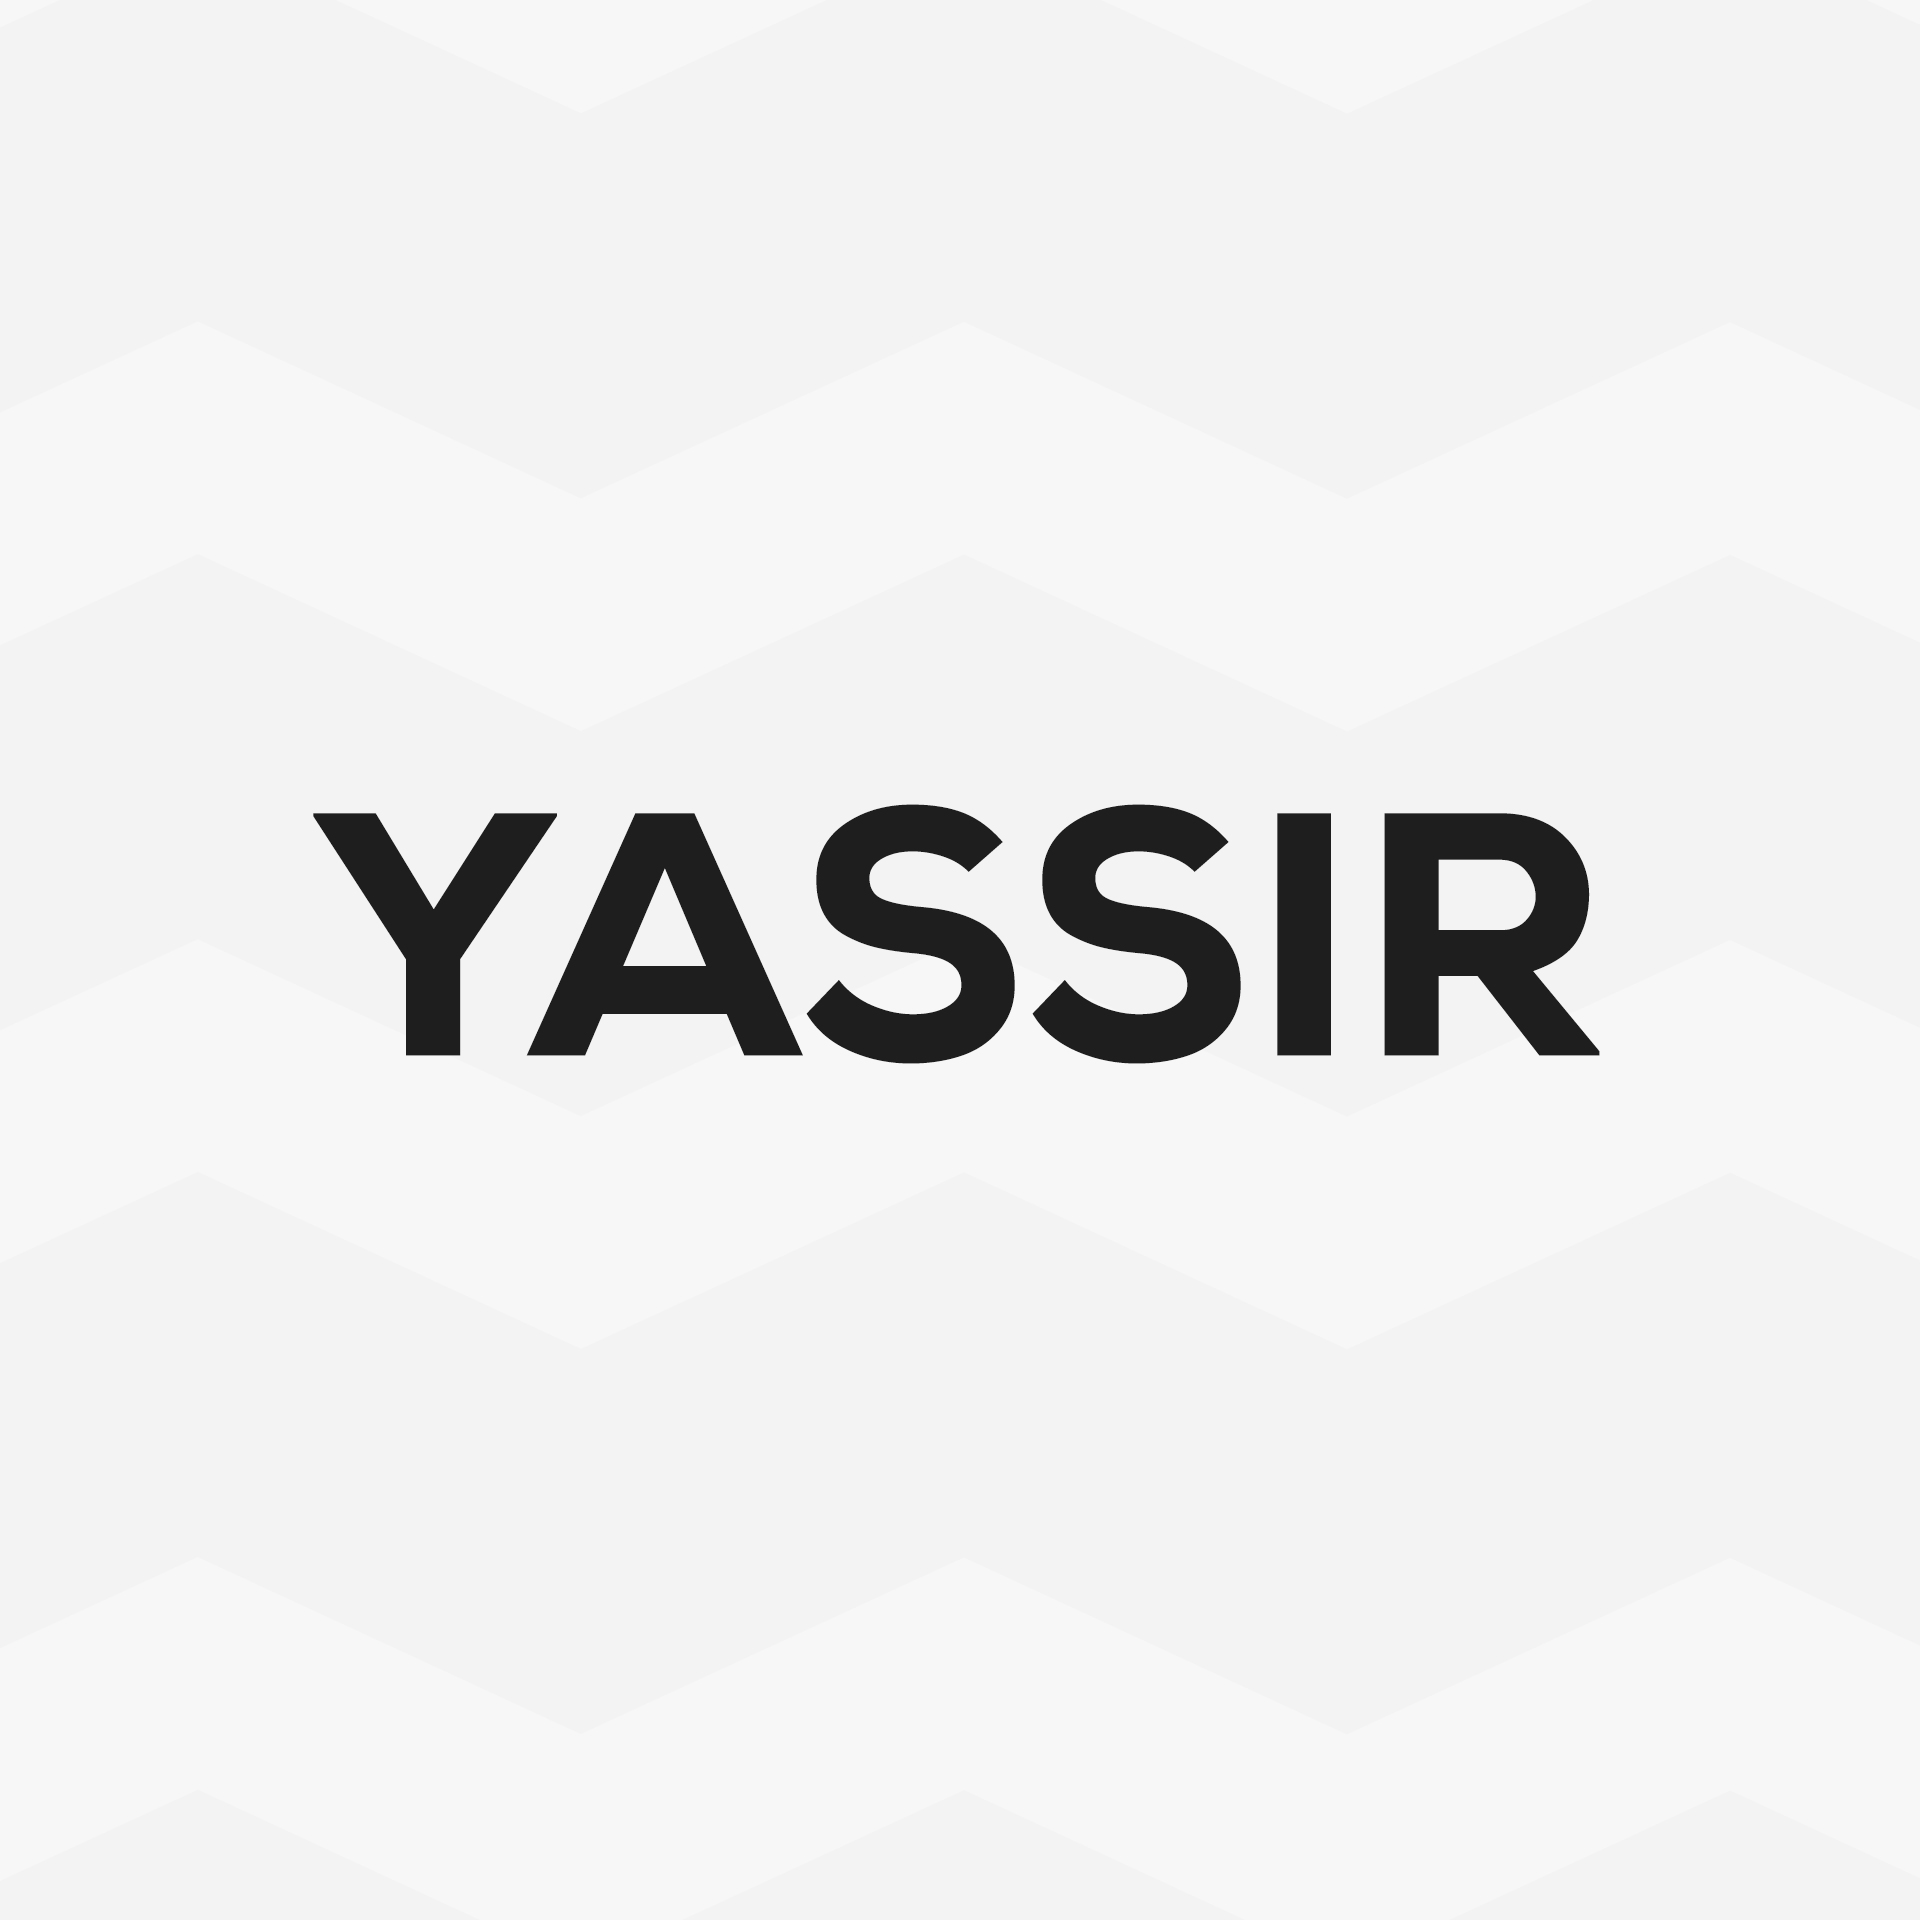 Yassi Vállalati profil